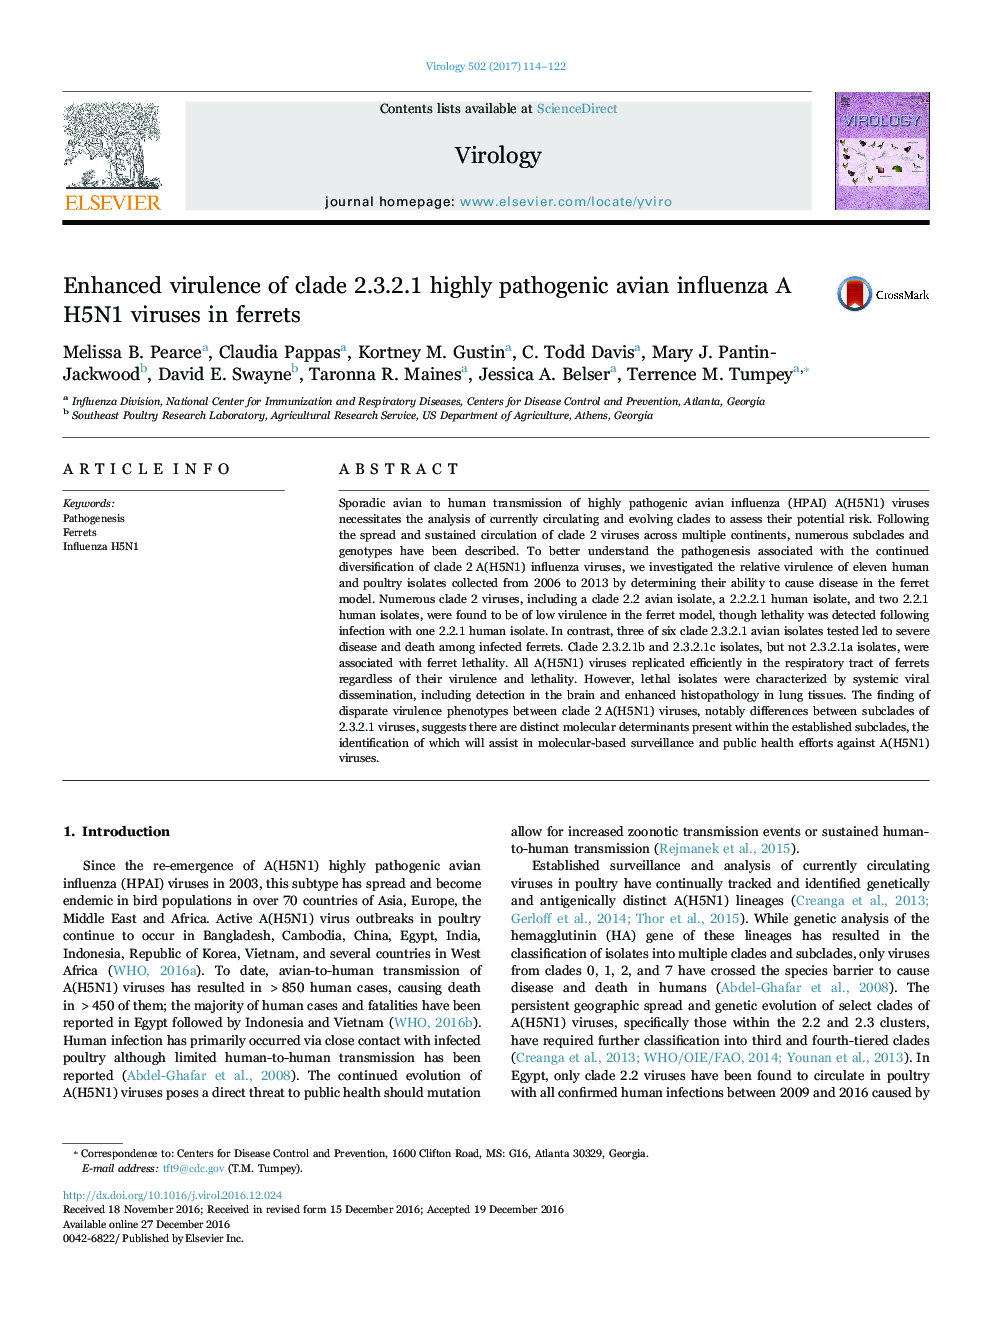 Enhanced virulence of clade 2.3.2.1 highly pathogenic avian influenza A H5N1 viruses in ferrets